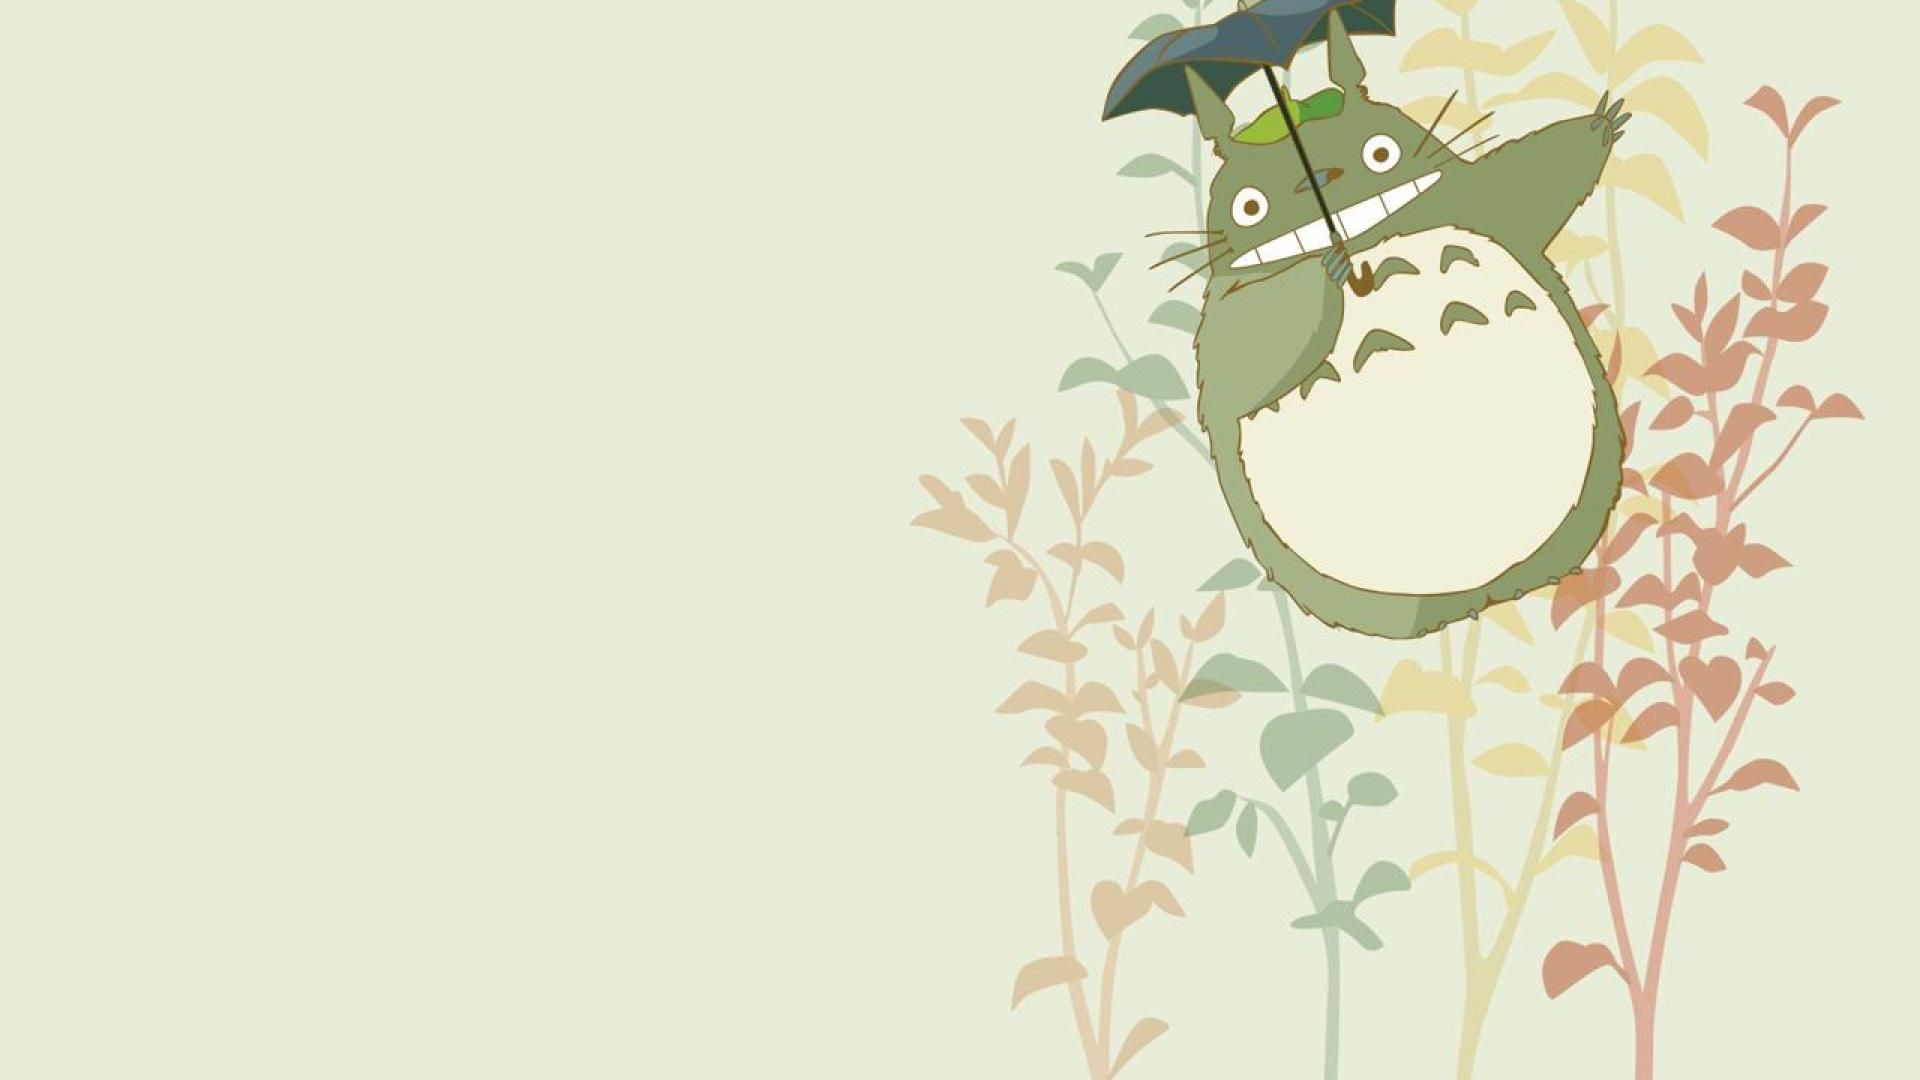 Hayao miyazaki wallpaper - High Quality and Resolution